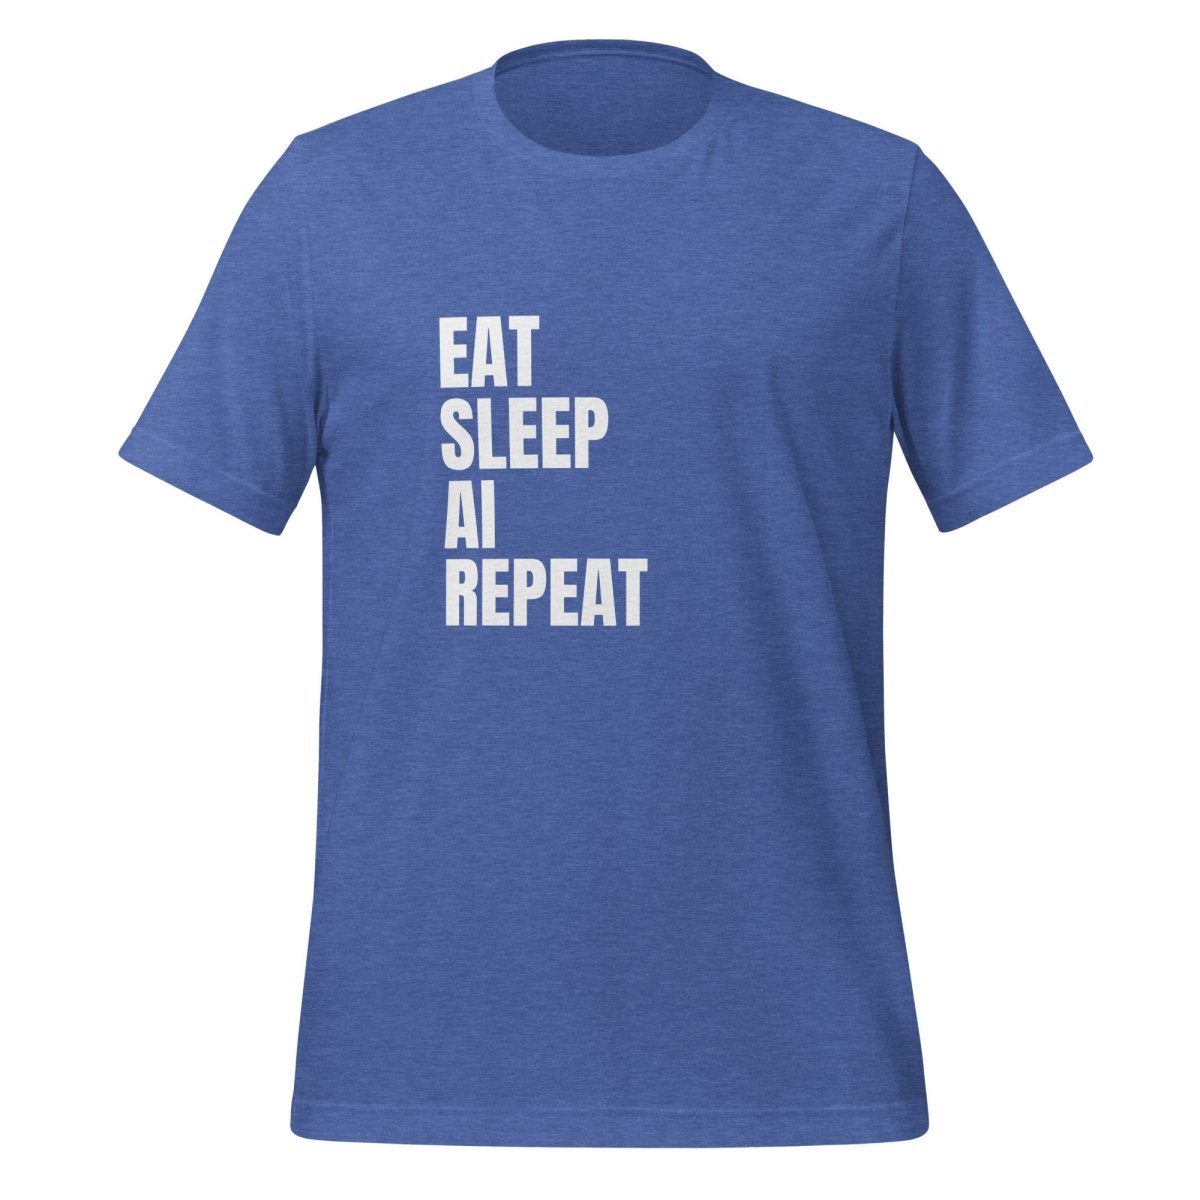 EAT SLEEP AI REPEAT T - Shirt 1 (unisex) - Heather True Royal - AI Store